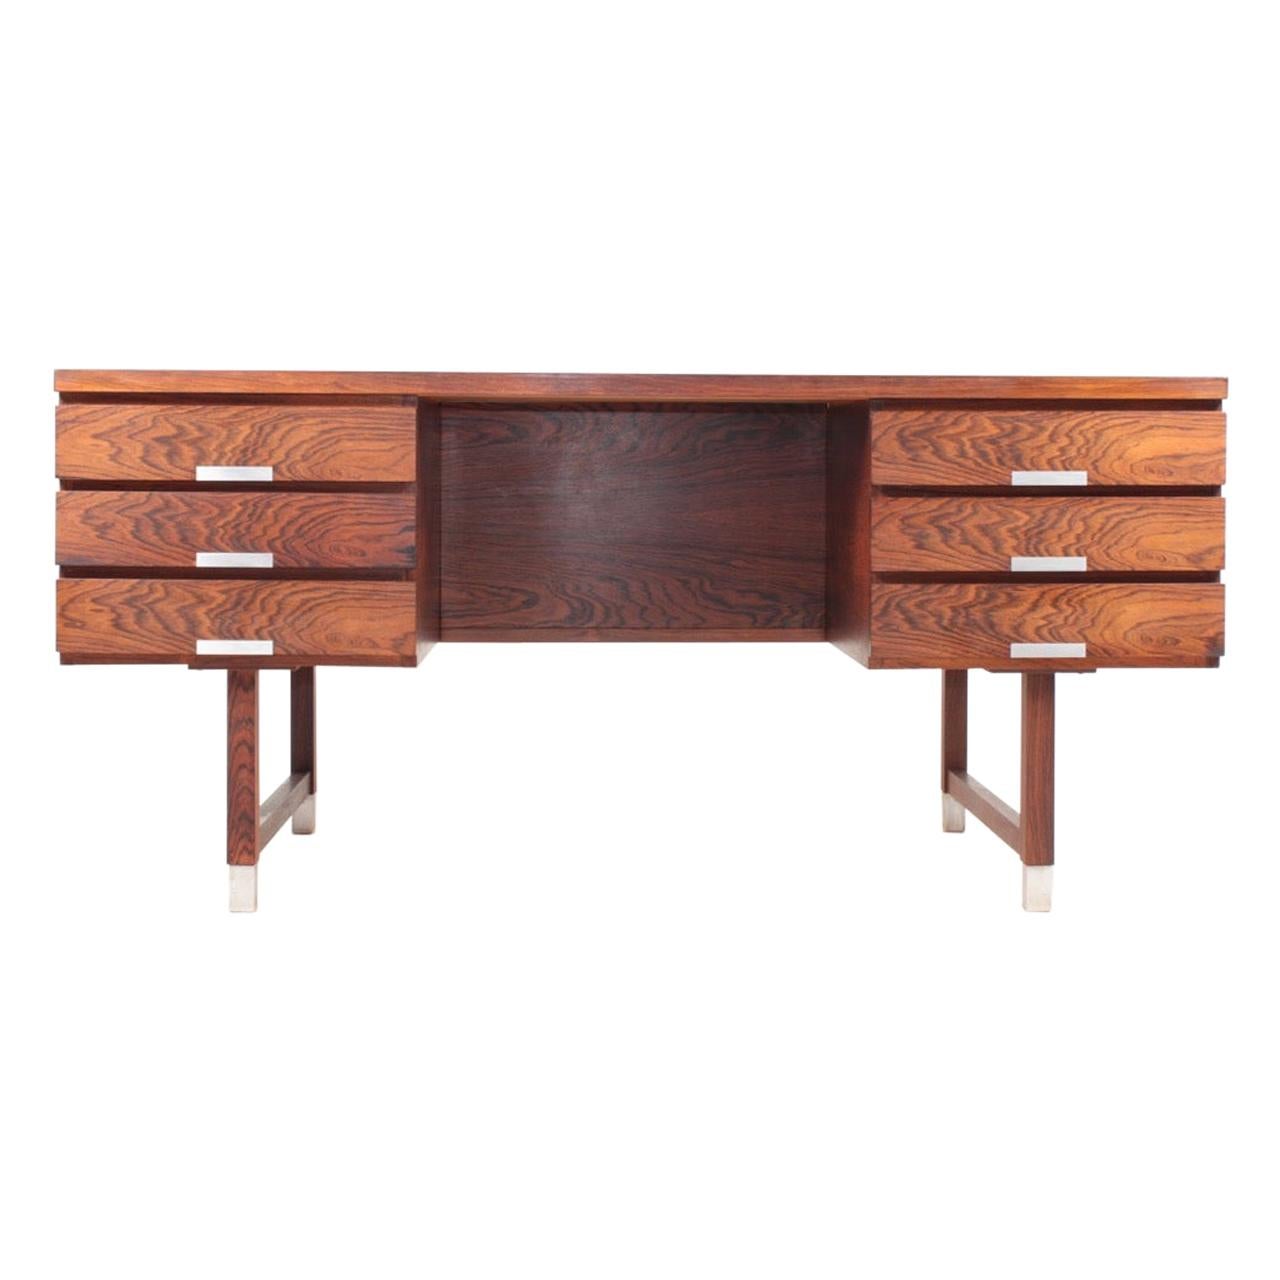 Freestanding Midcentury Desk in Rosewood, Designed by Ejgil Petersen, 1960s For Sale